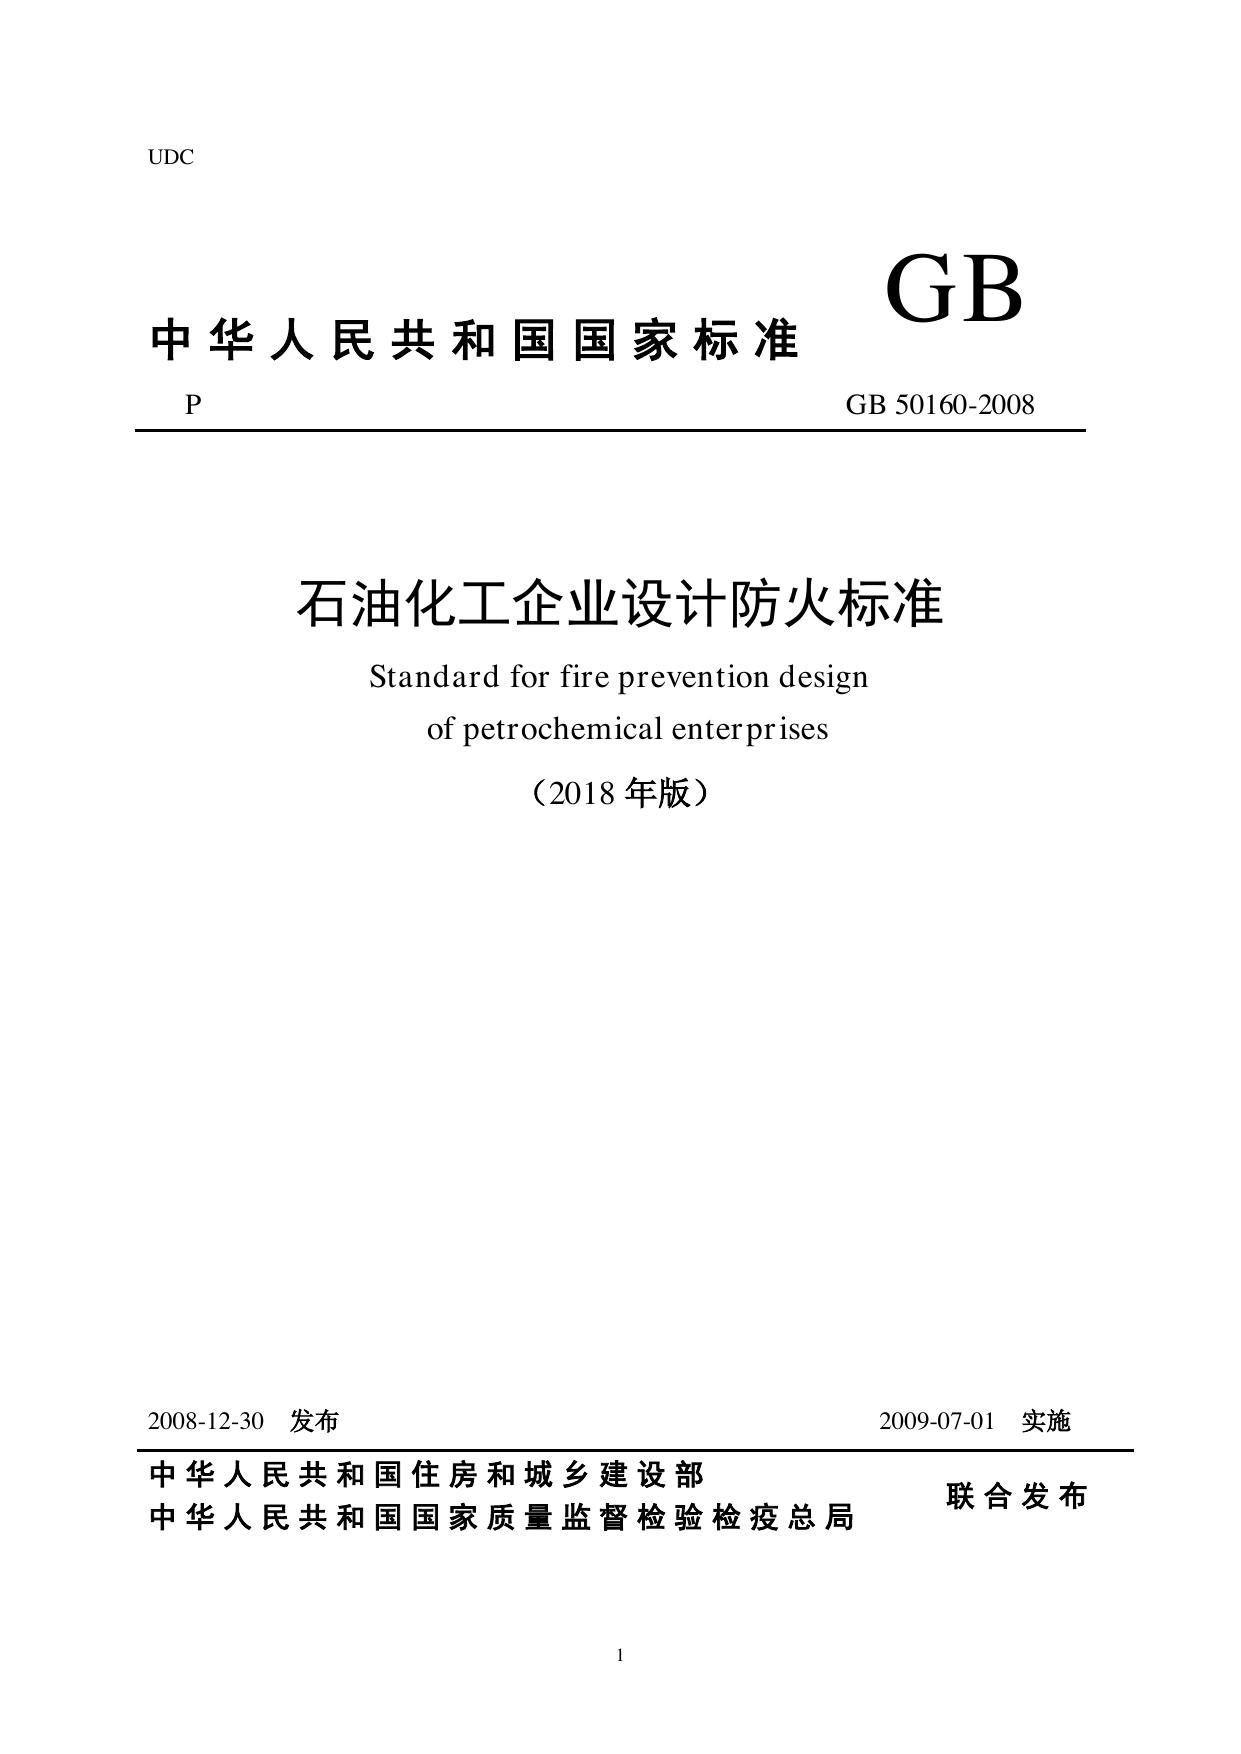 GB50160-2008石油化工企业设计防火标准(2018年版)